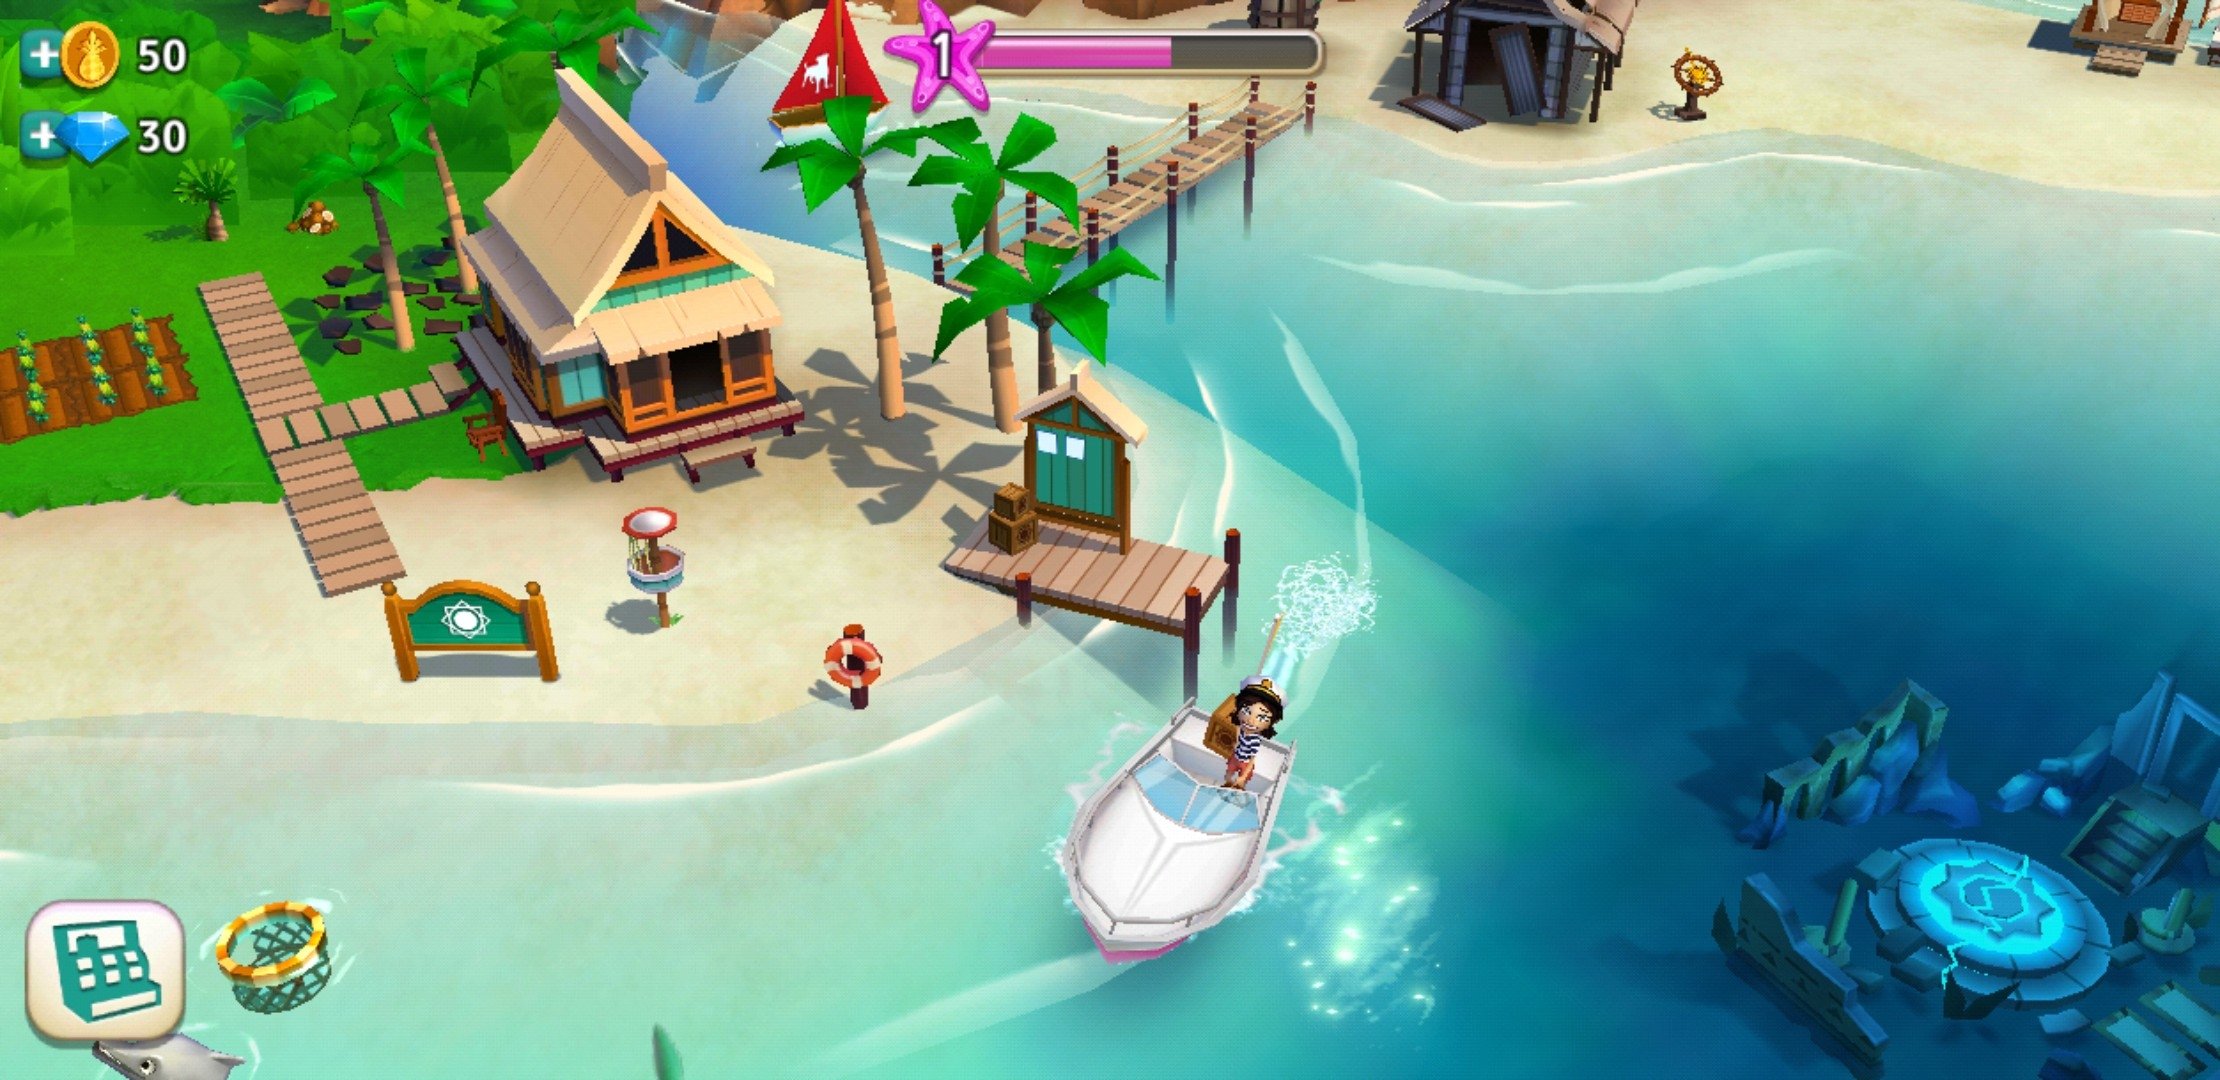 Download FarmVille 2: Tropic Escape android on PC